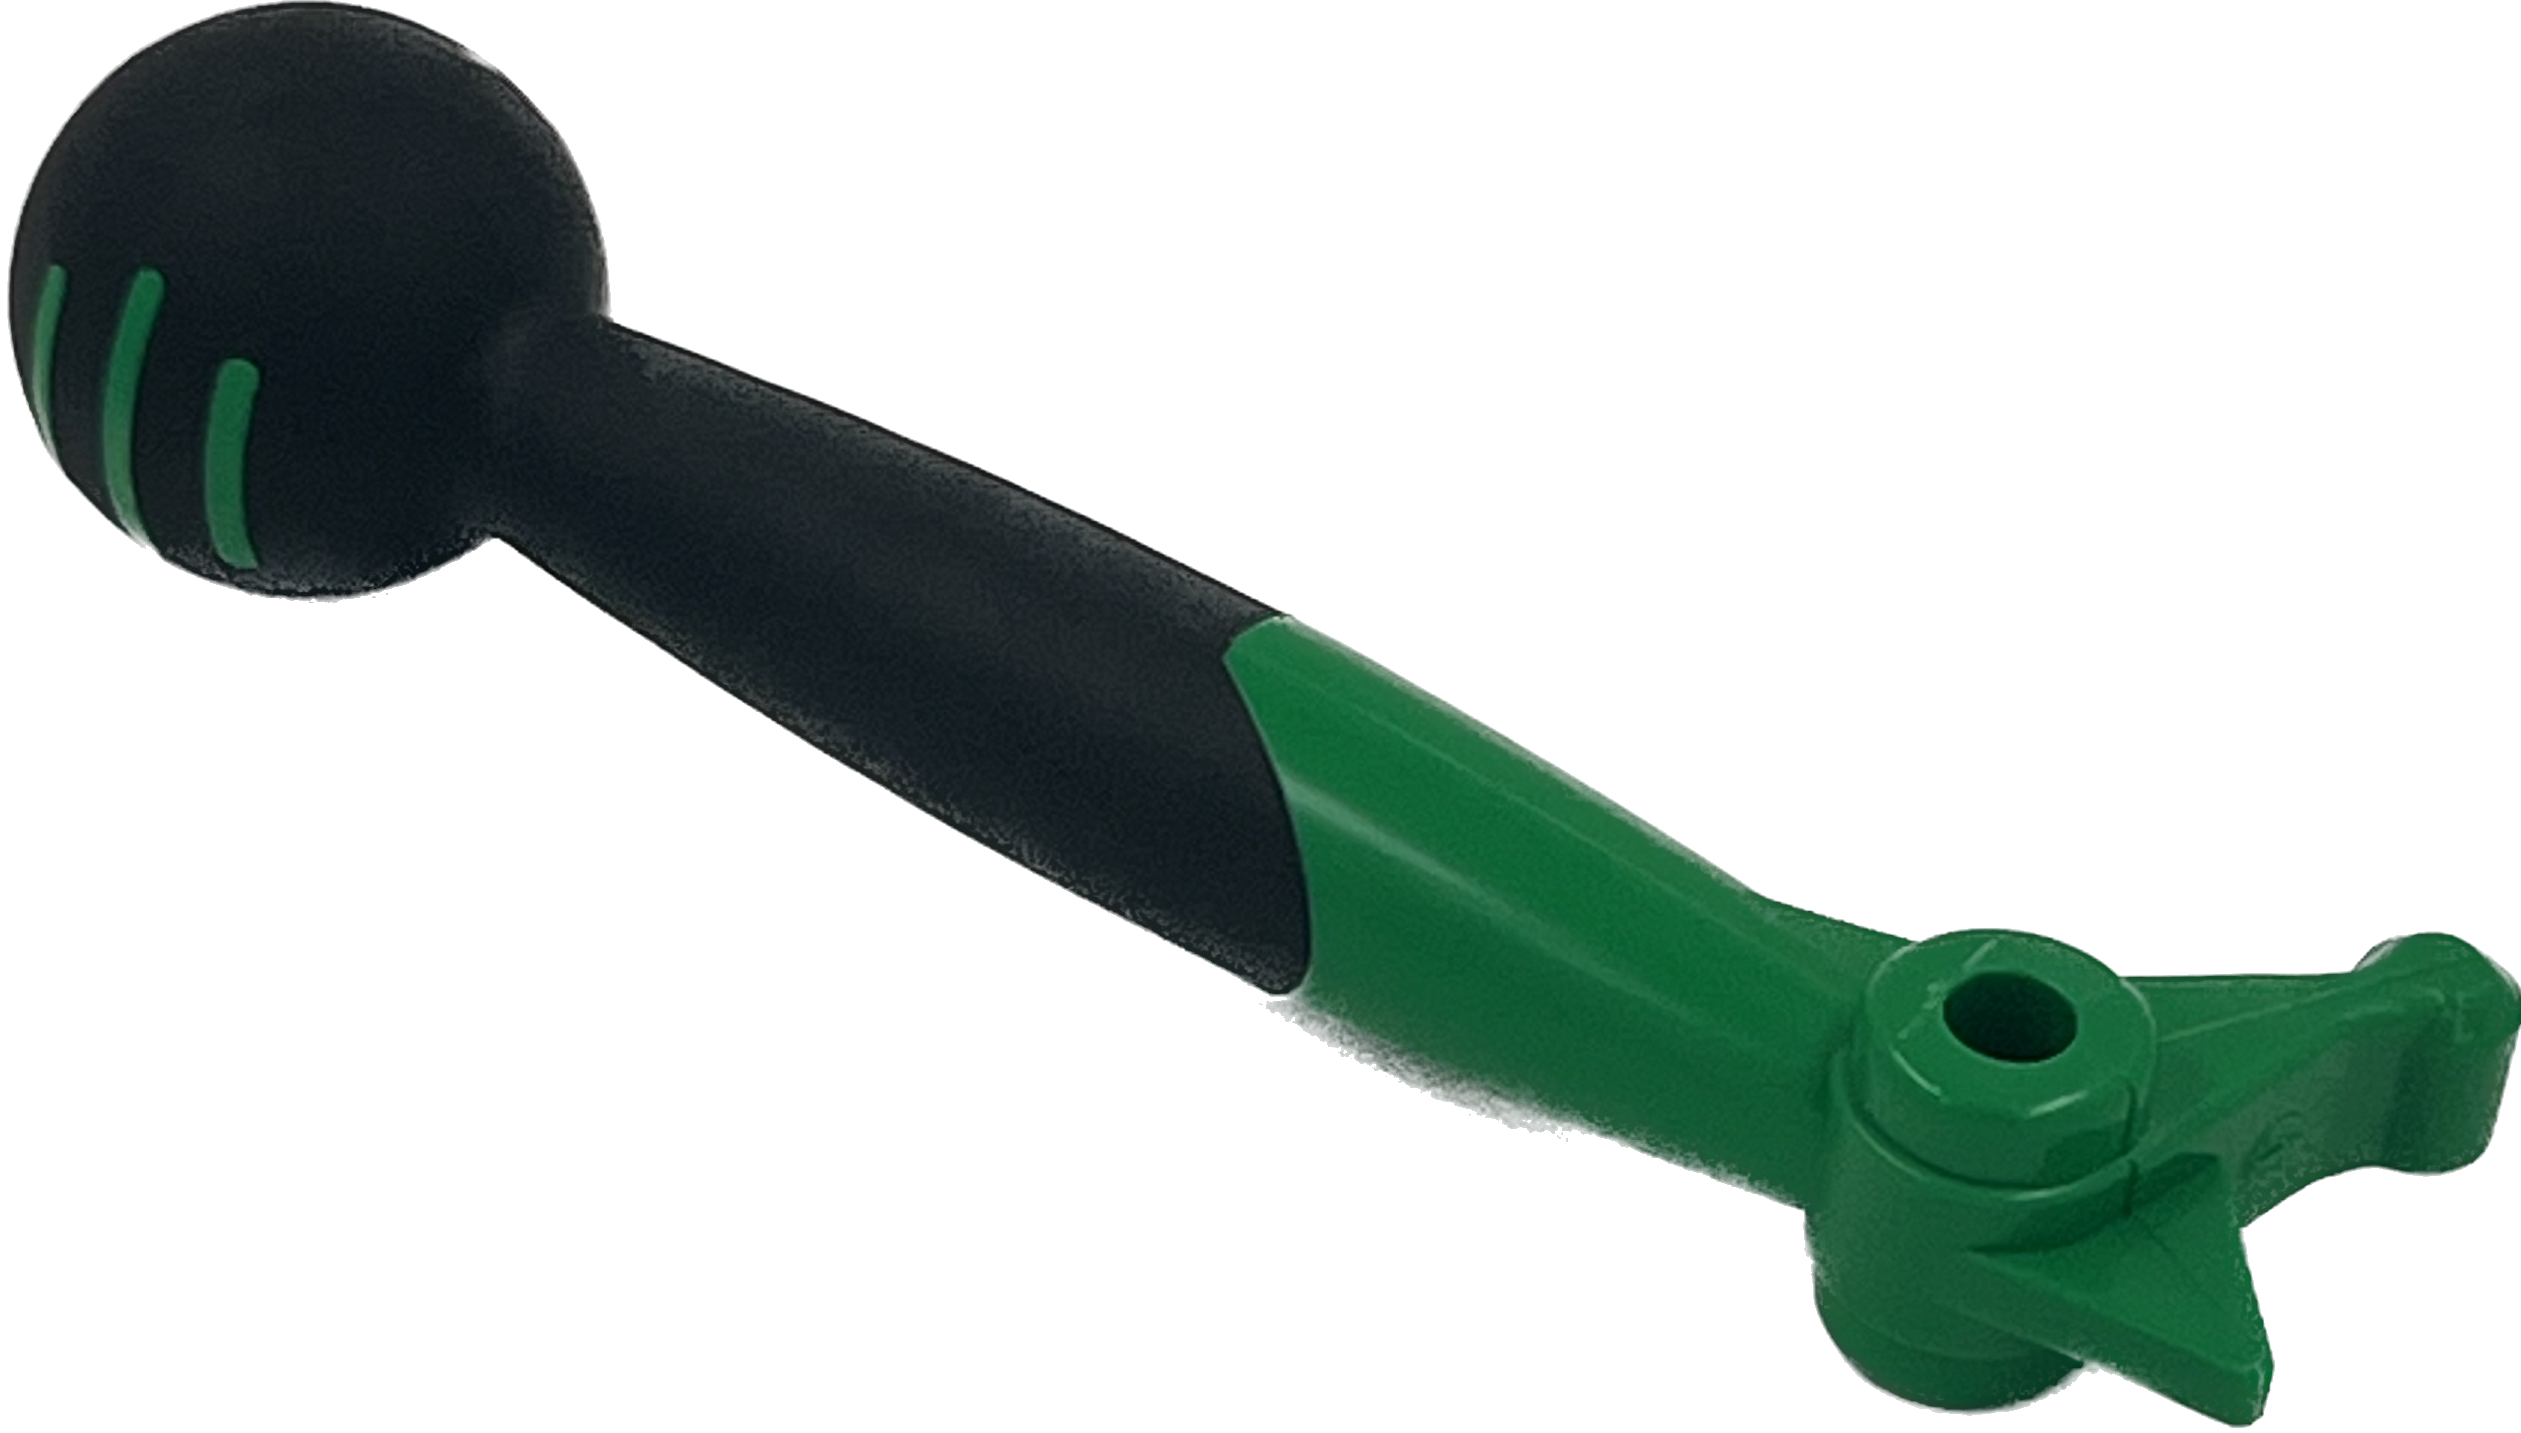 Atlas: handle green lever